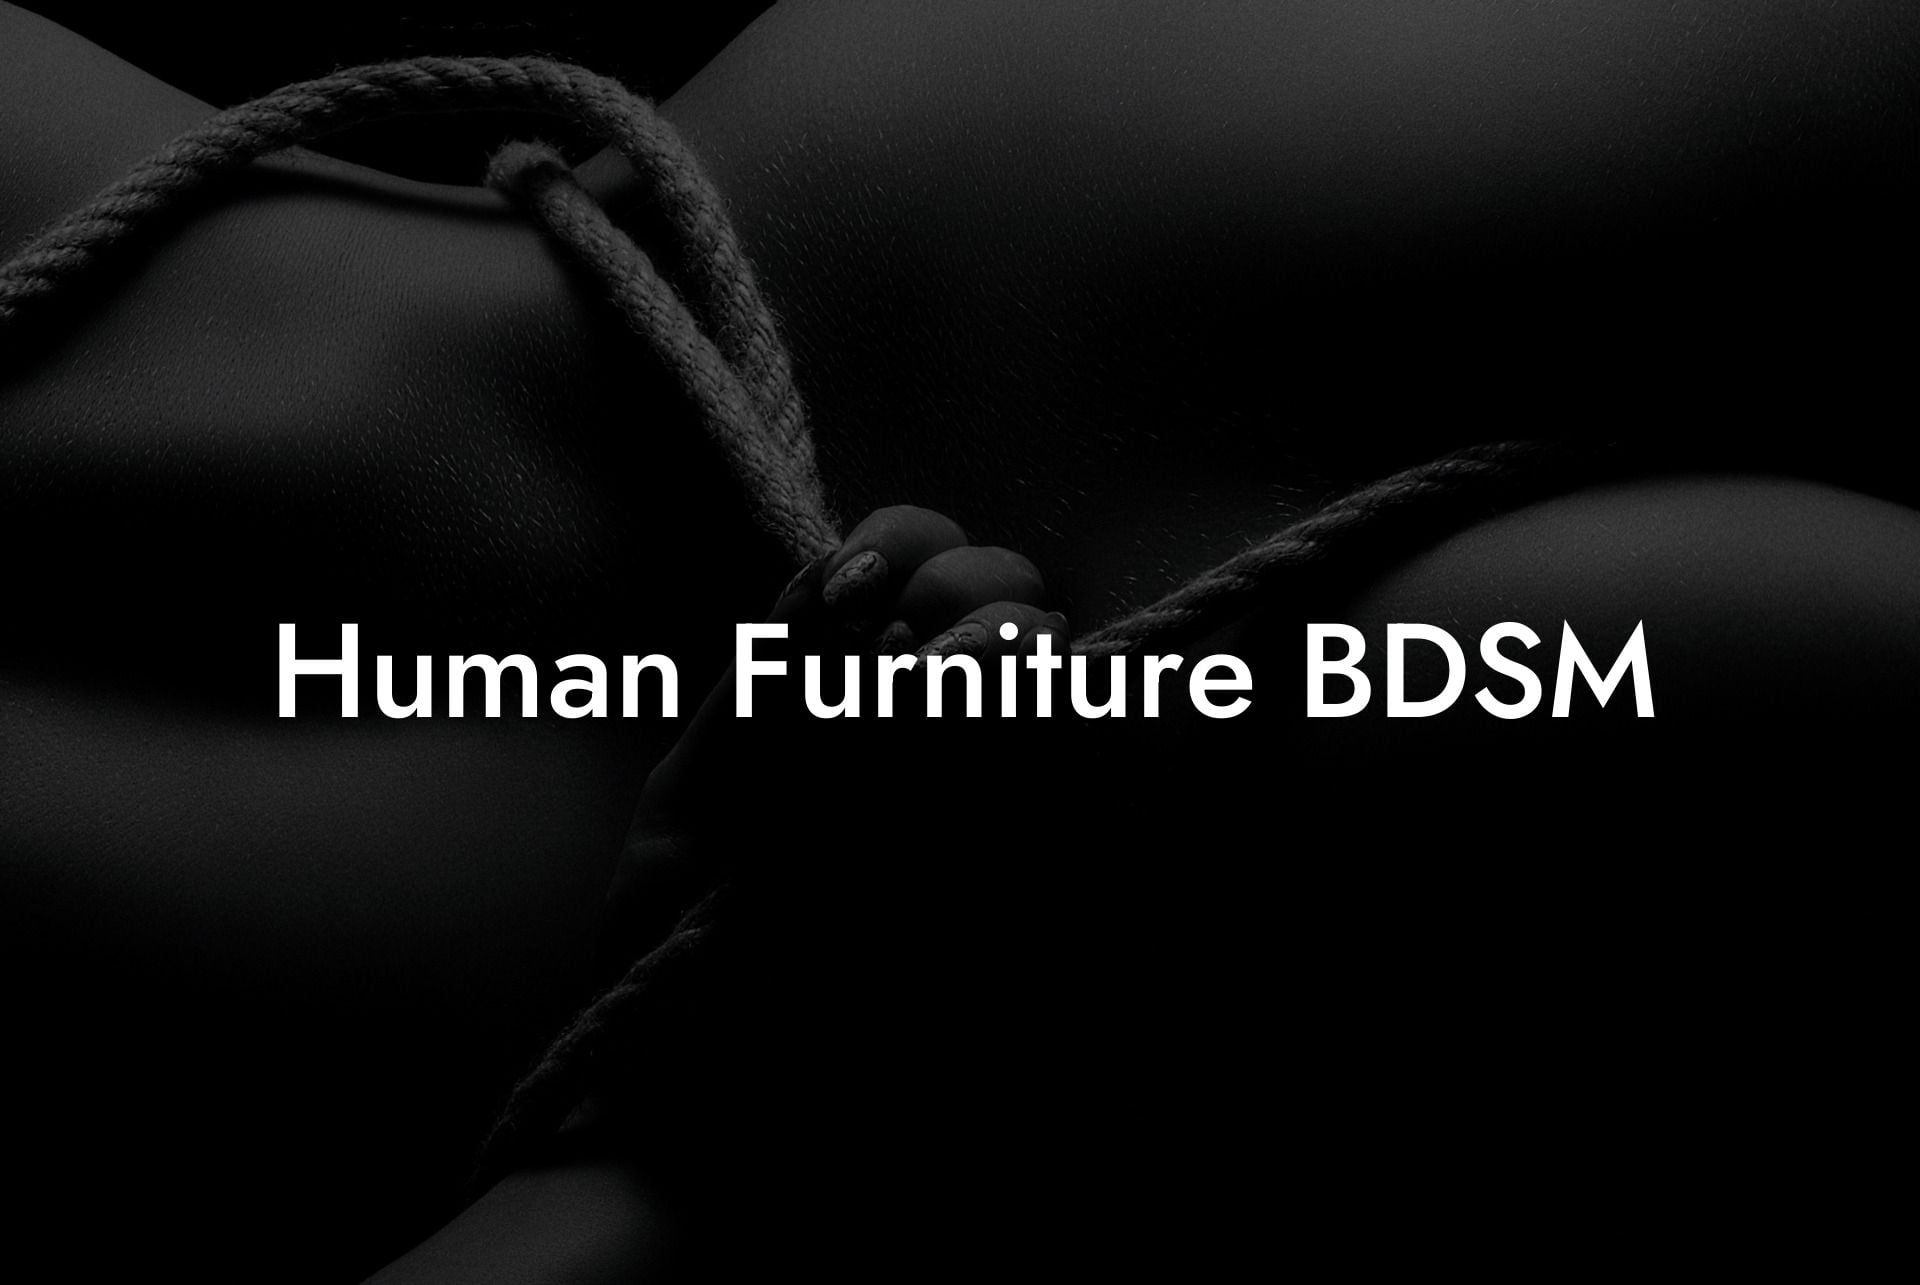 Human Furniture BDSM